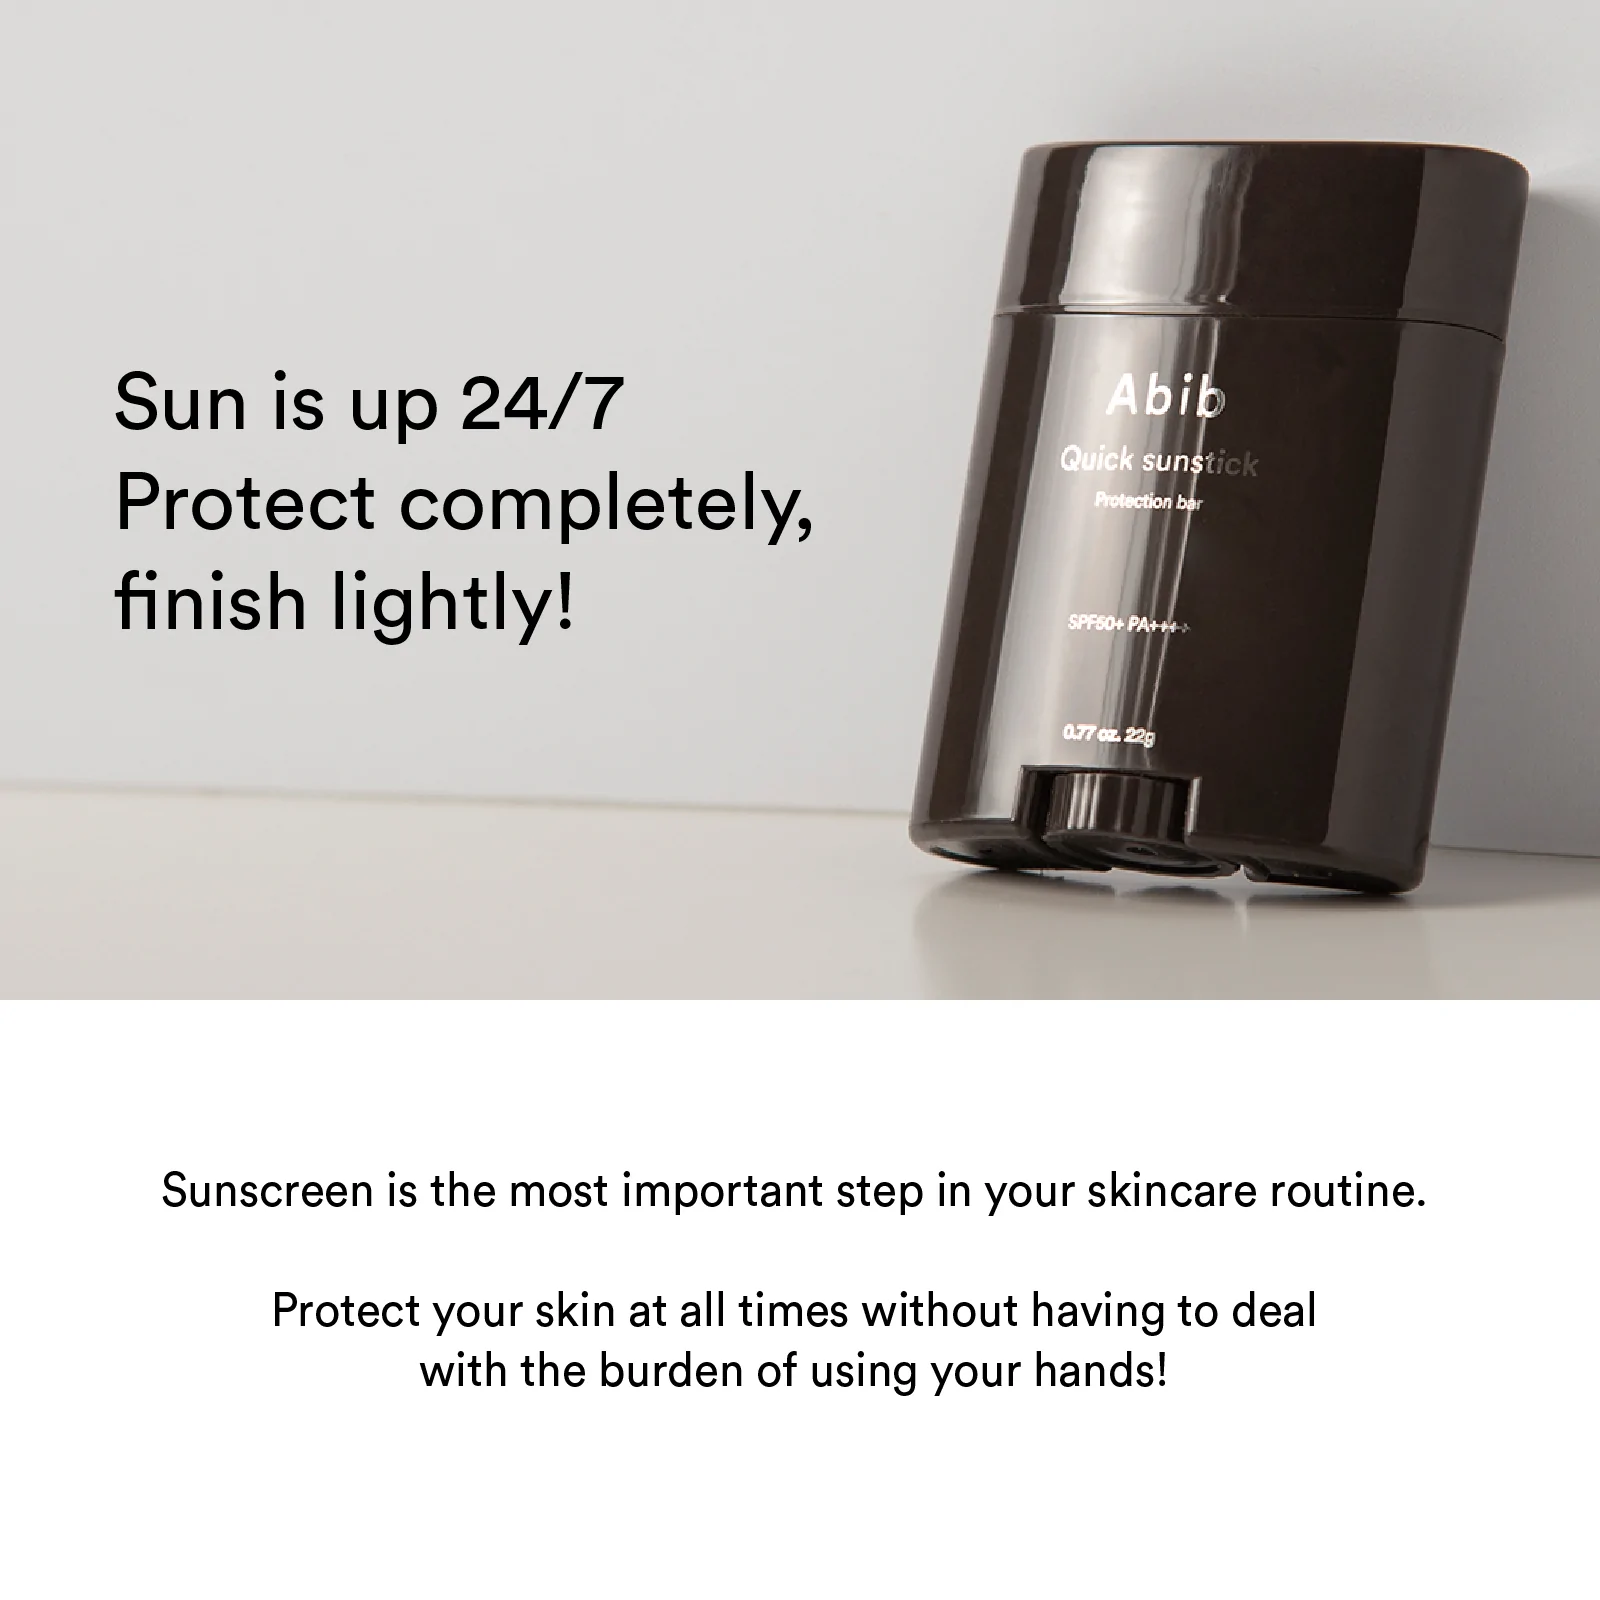 Quick Sunstick Protection bar